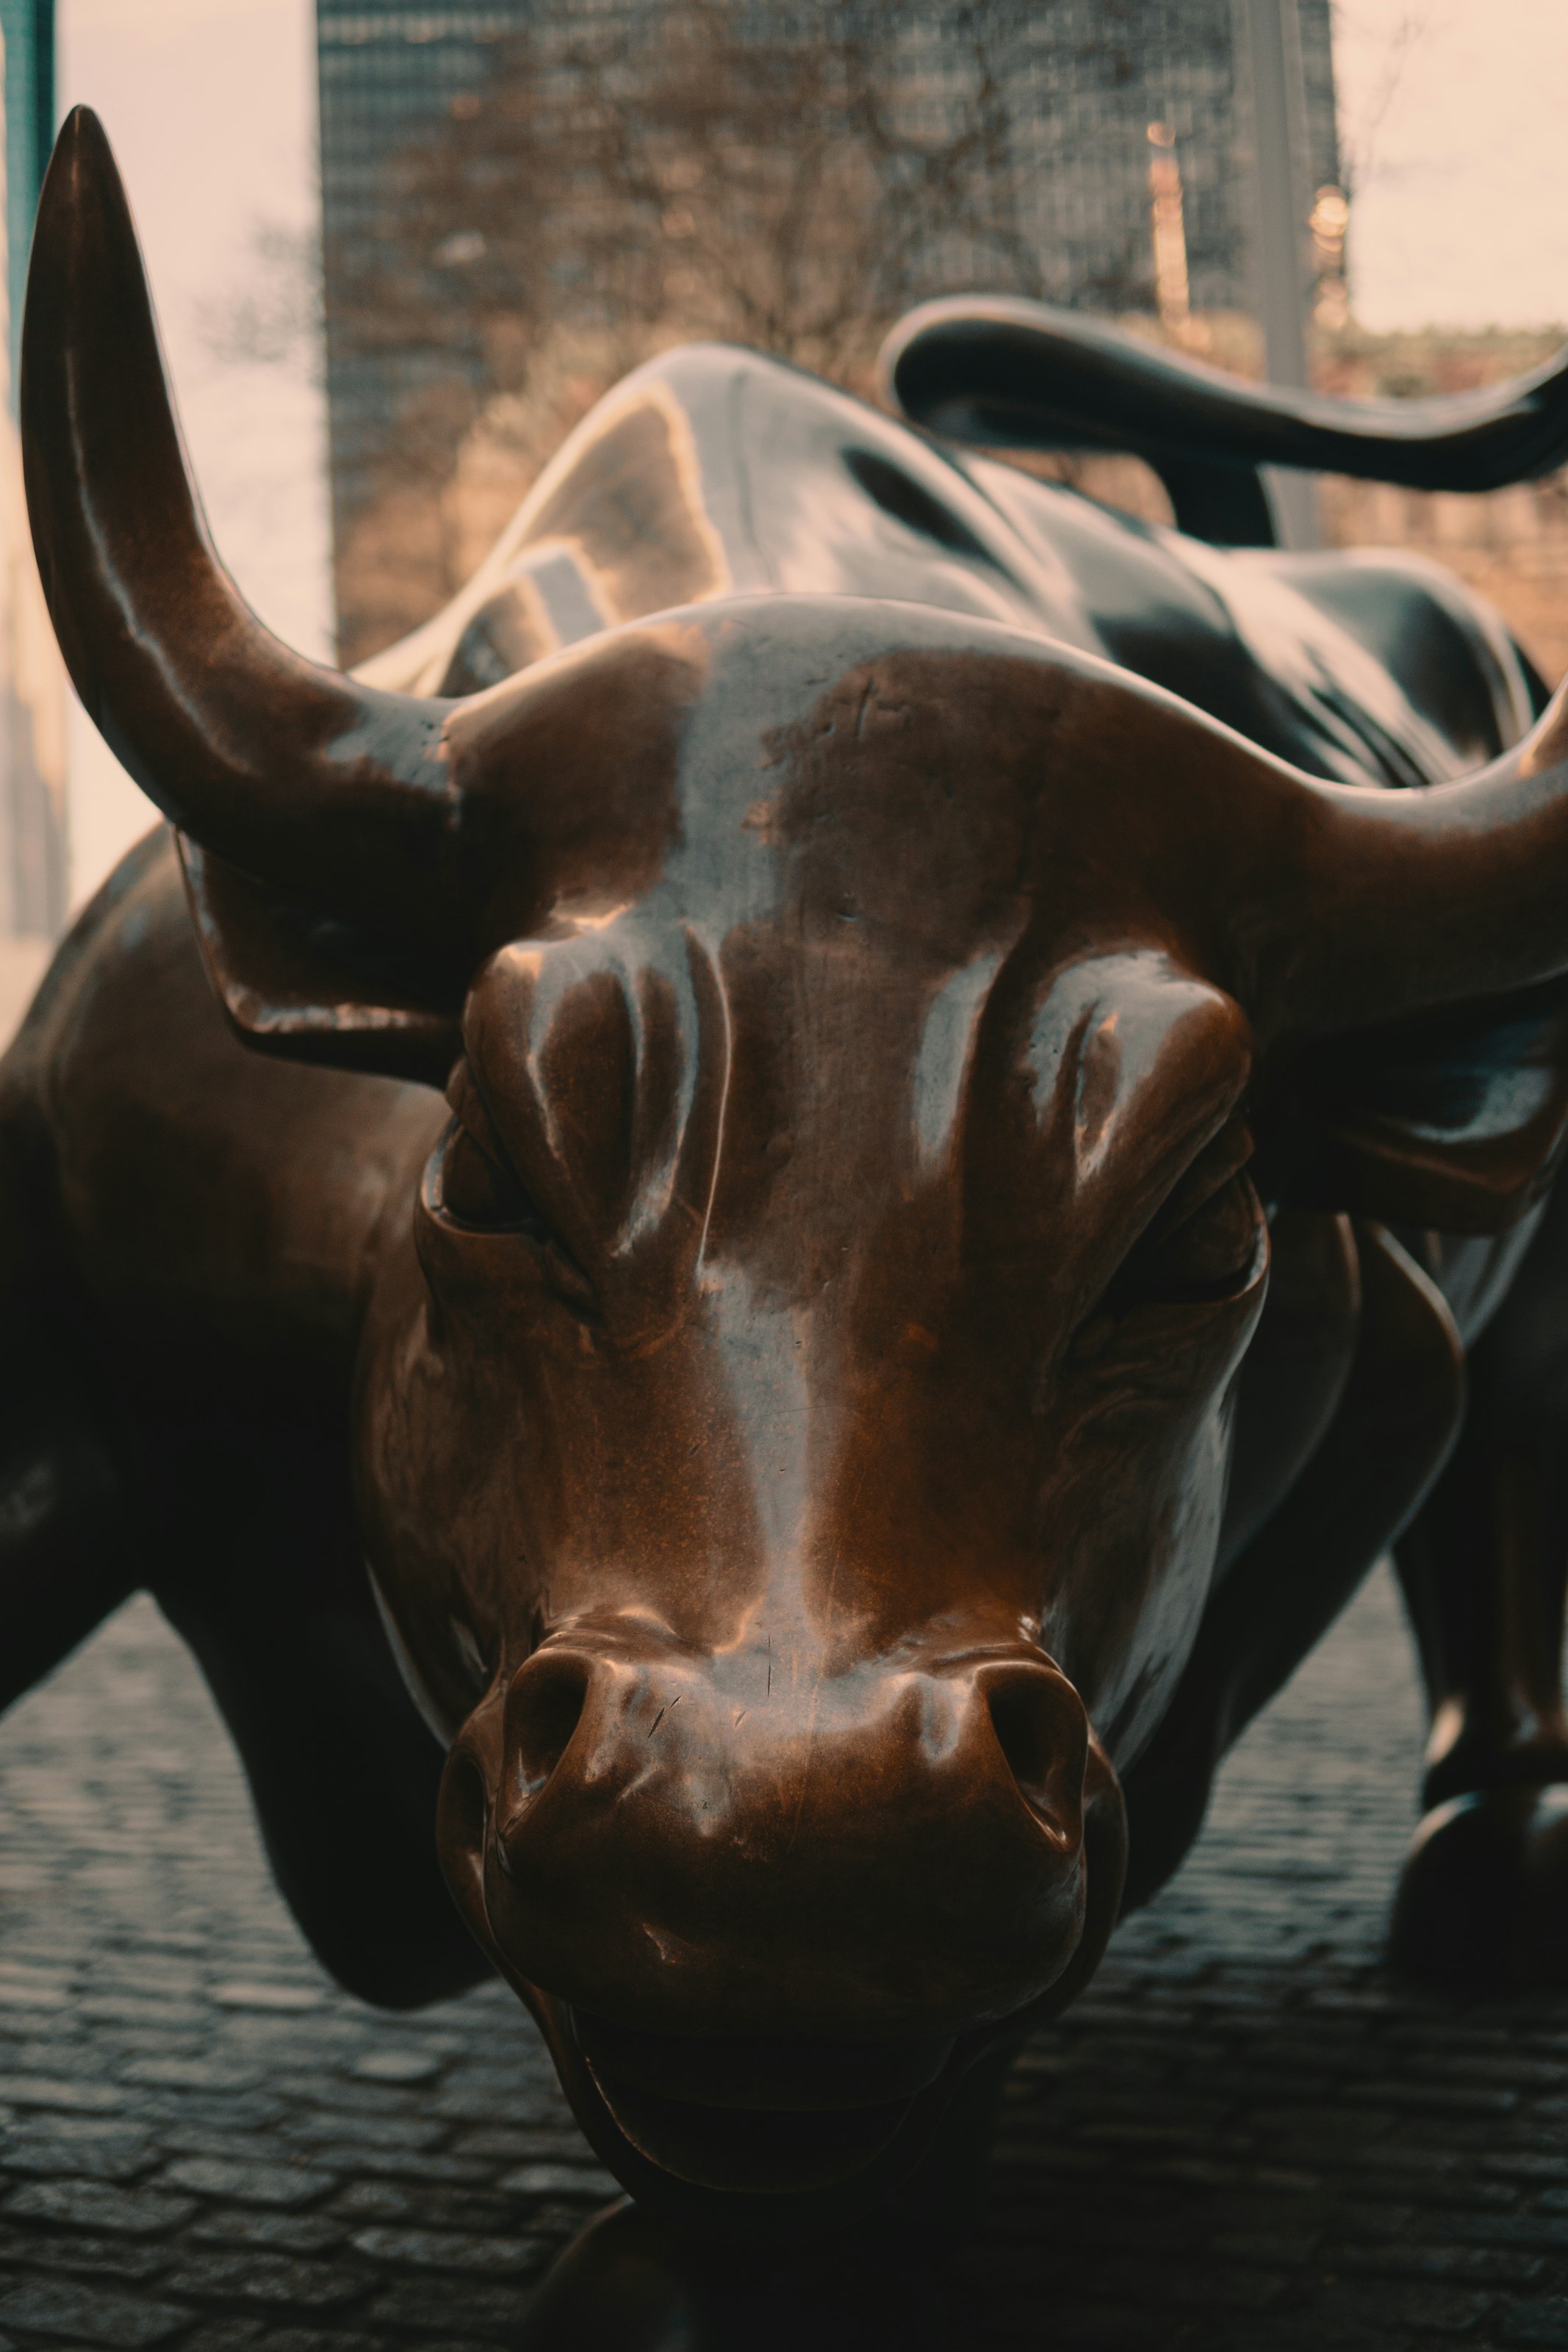 “Charging Bull” or “Wall Street Bull” in New York City